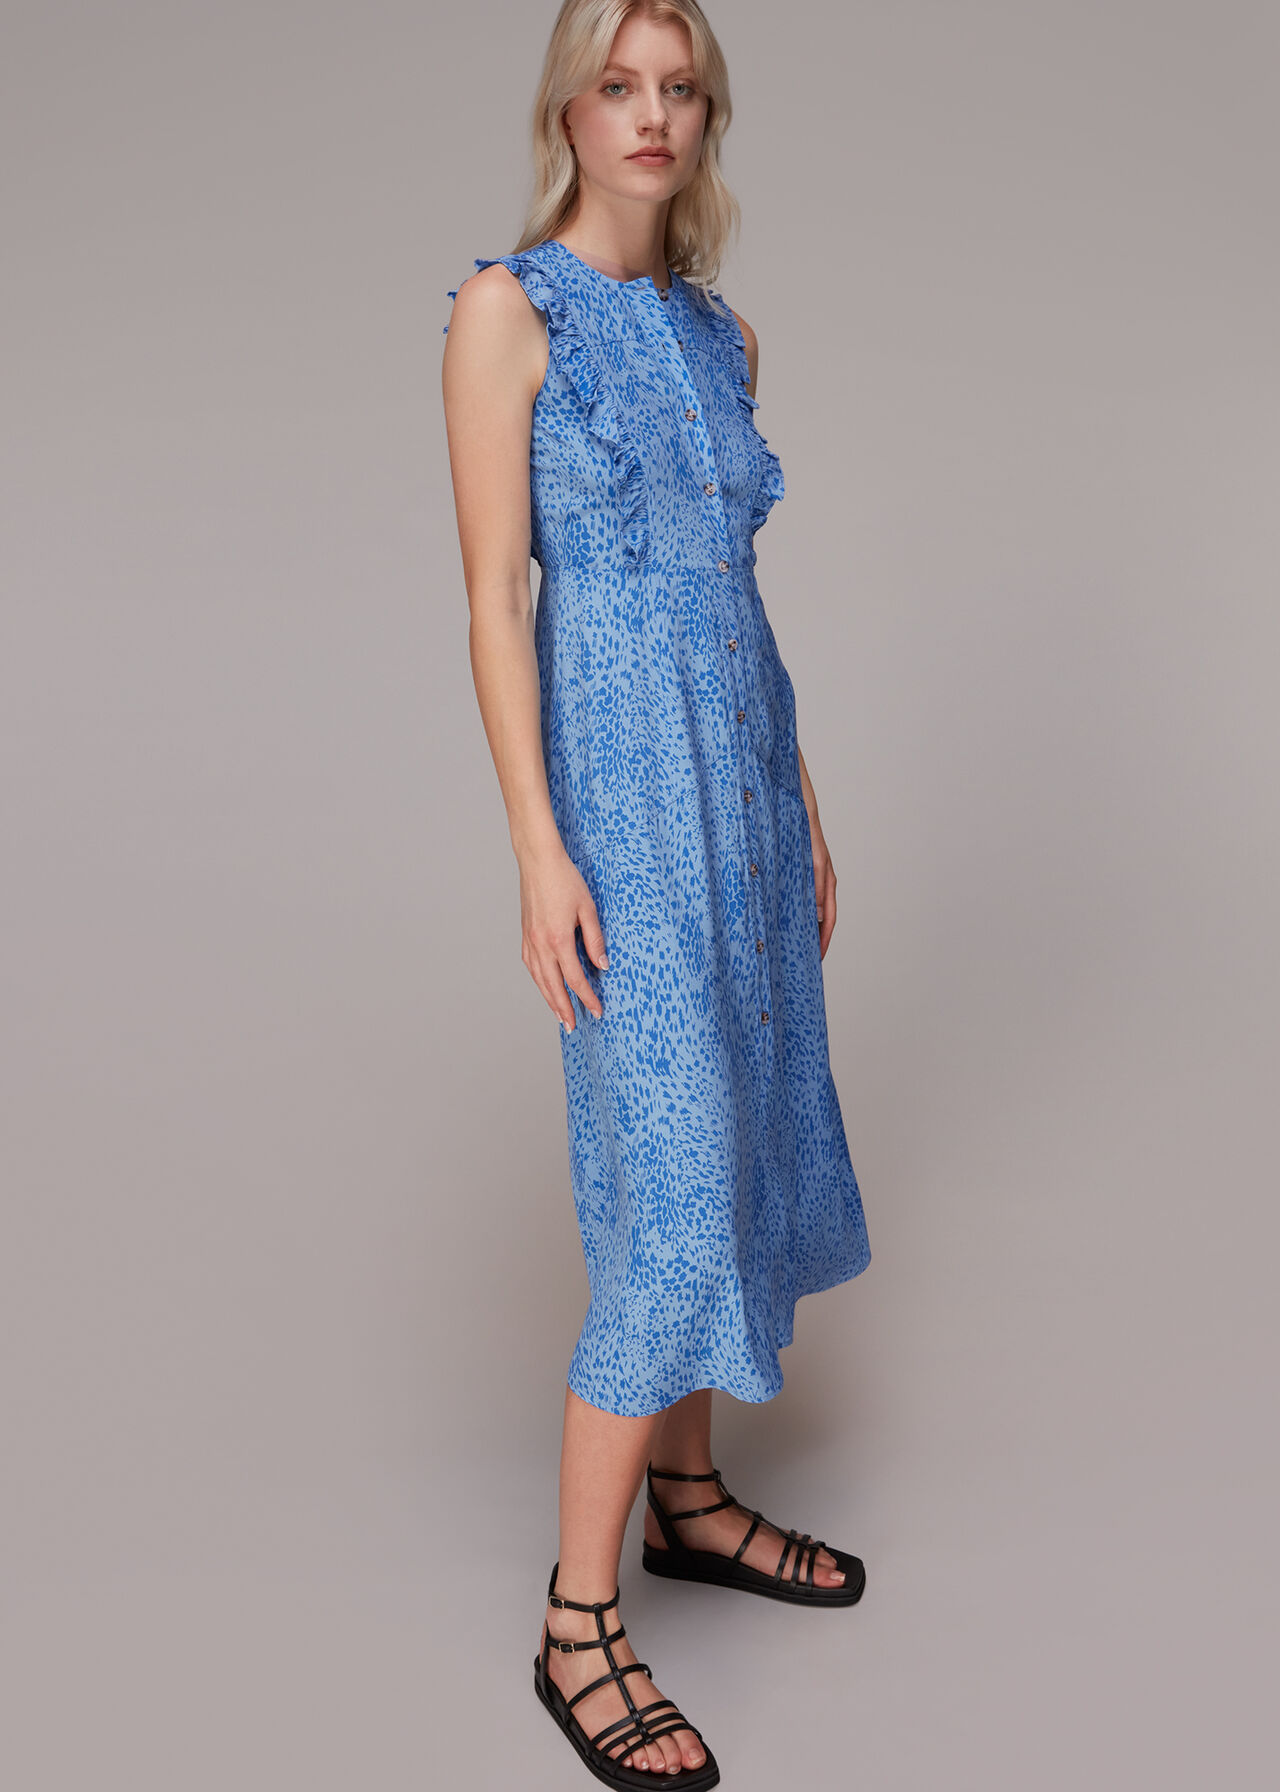 Kate Spade Floral Flora Lace Blue Ruffle Dress Sz 8